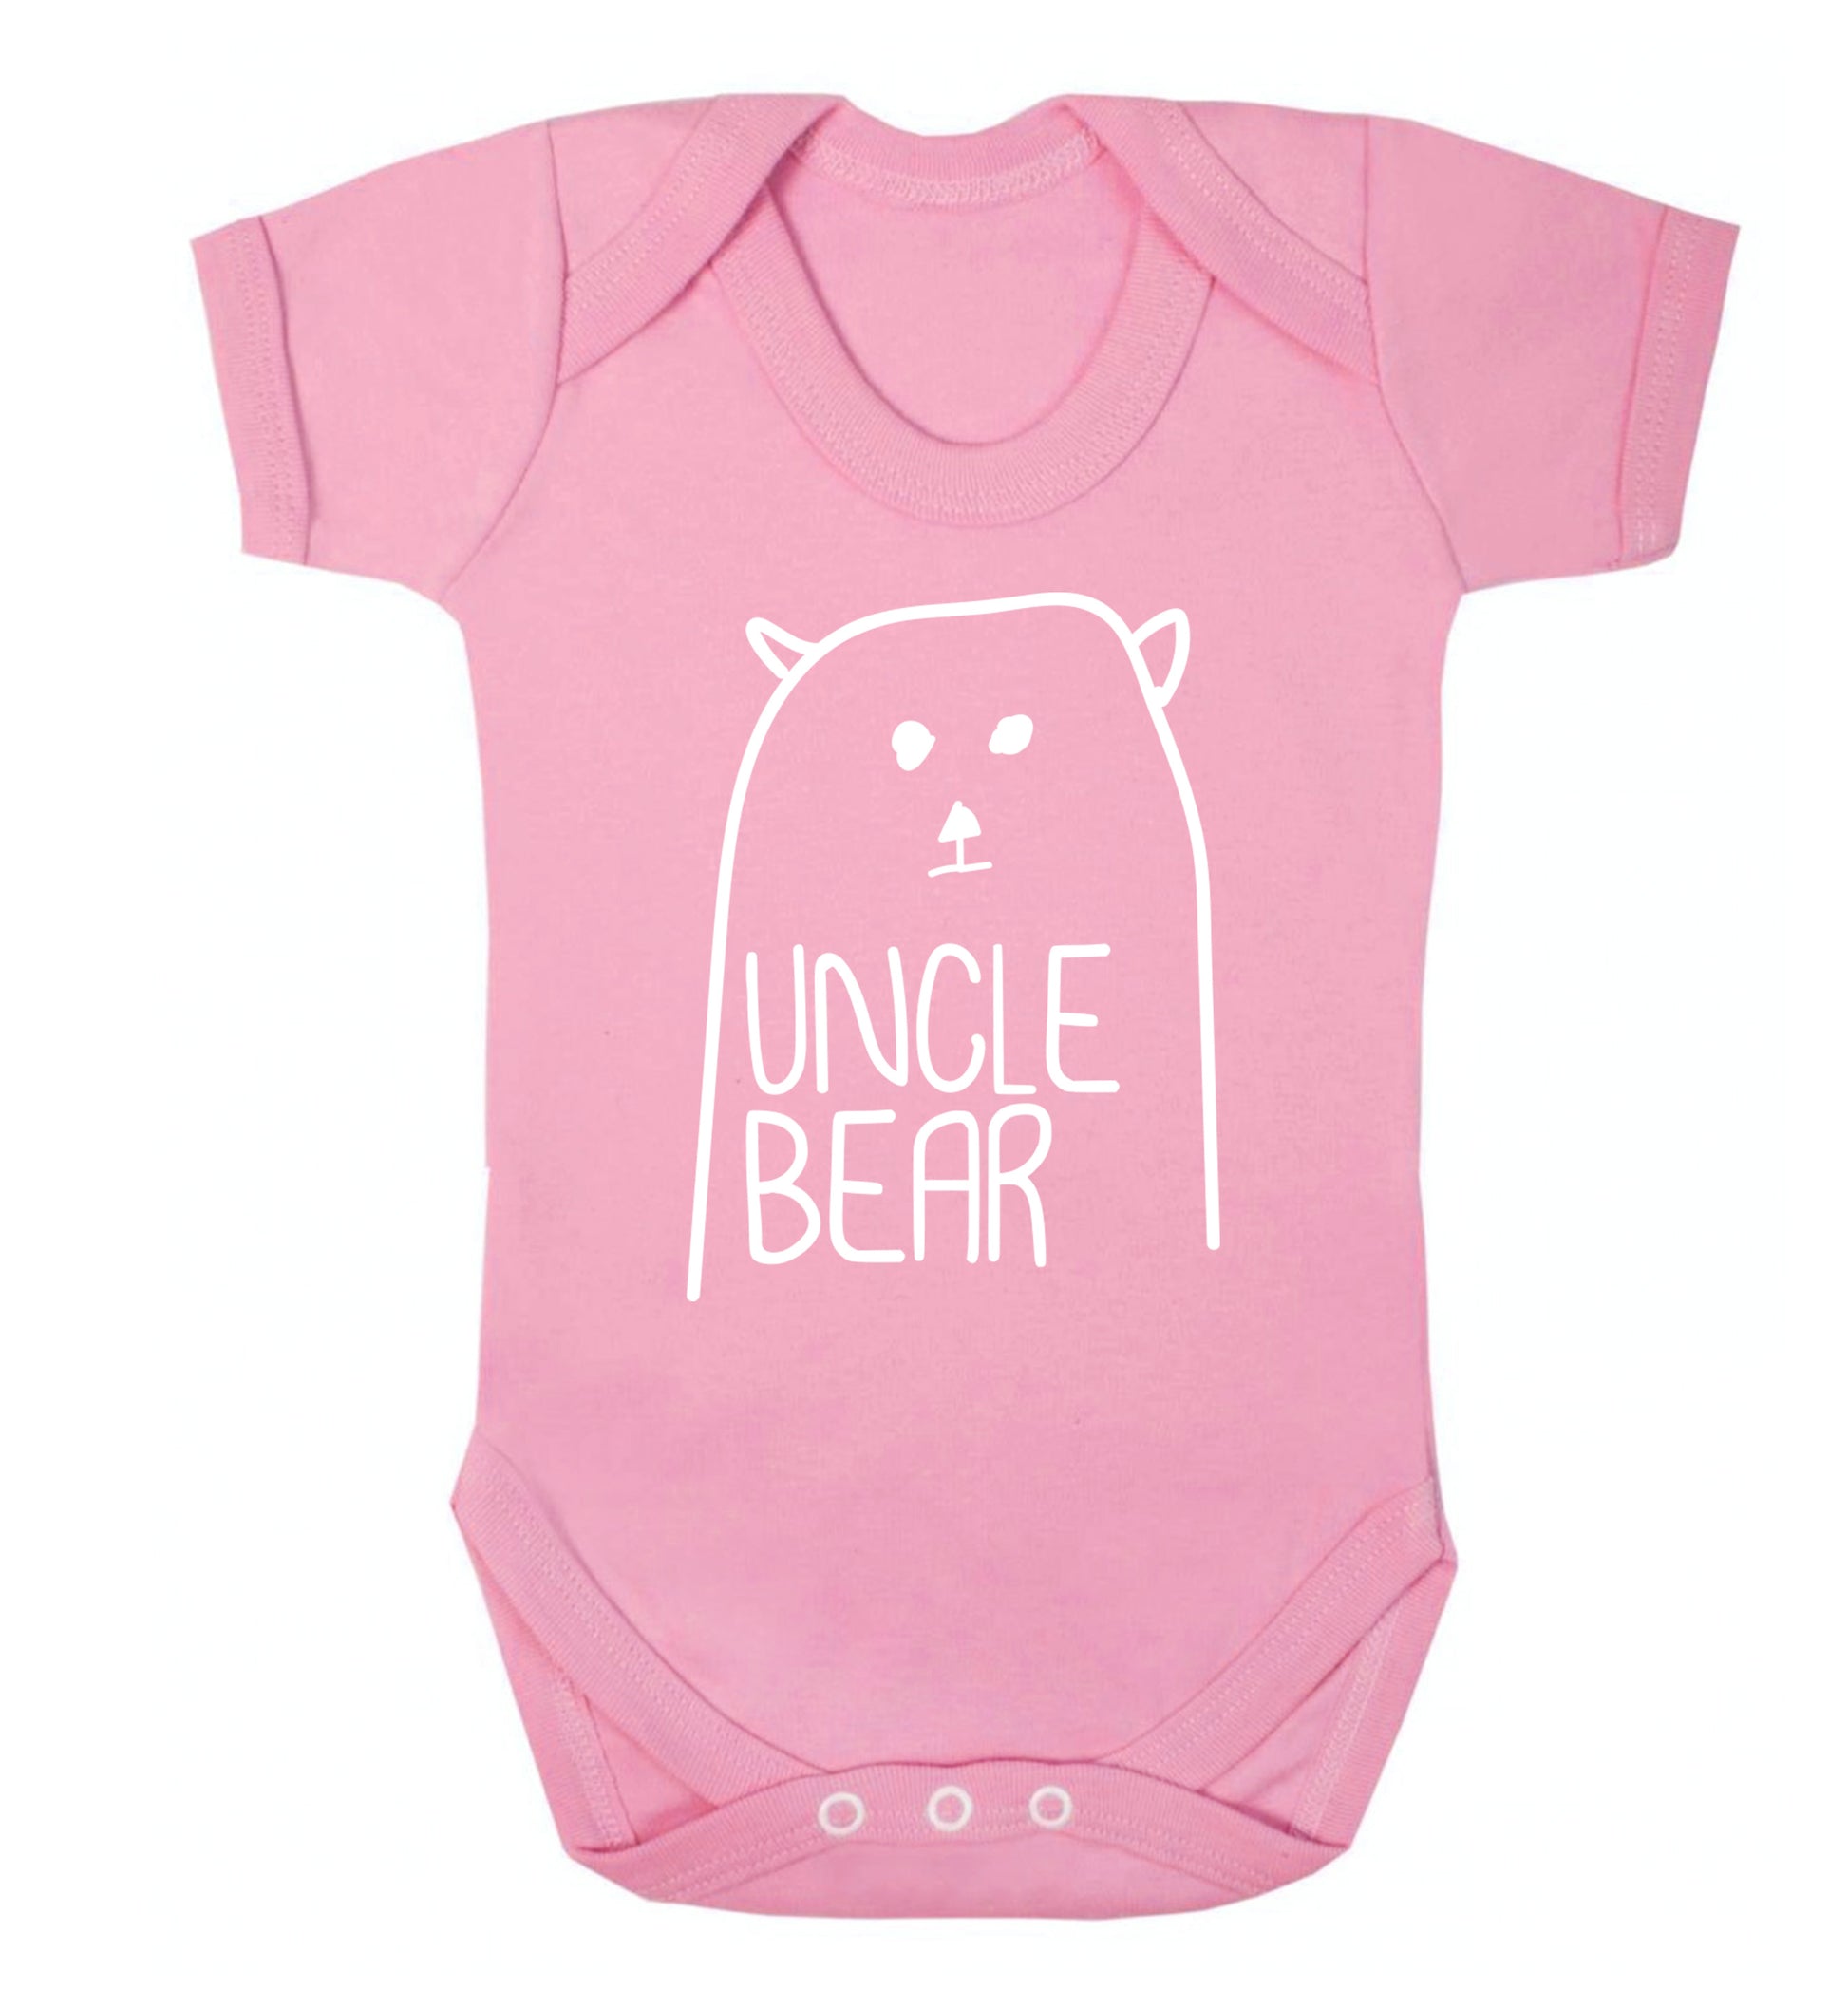 Uncle bear Baby Vest pale pink 18-24 months